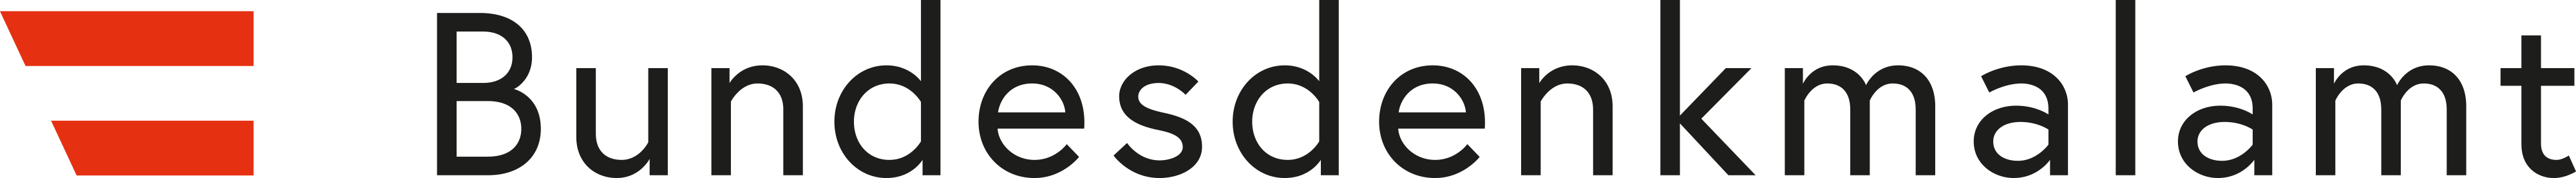 Bundesdenkmalamt Logo cmyk